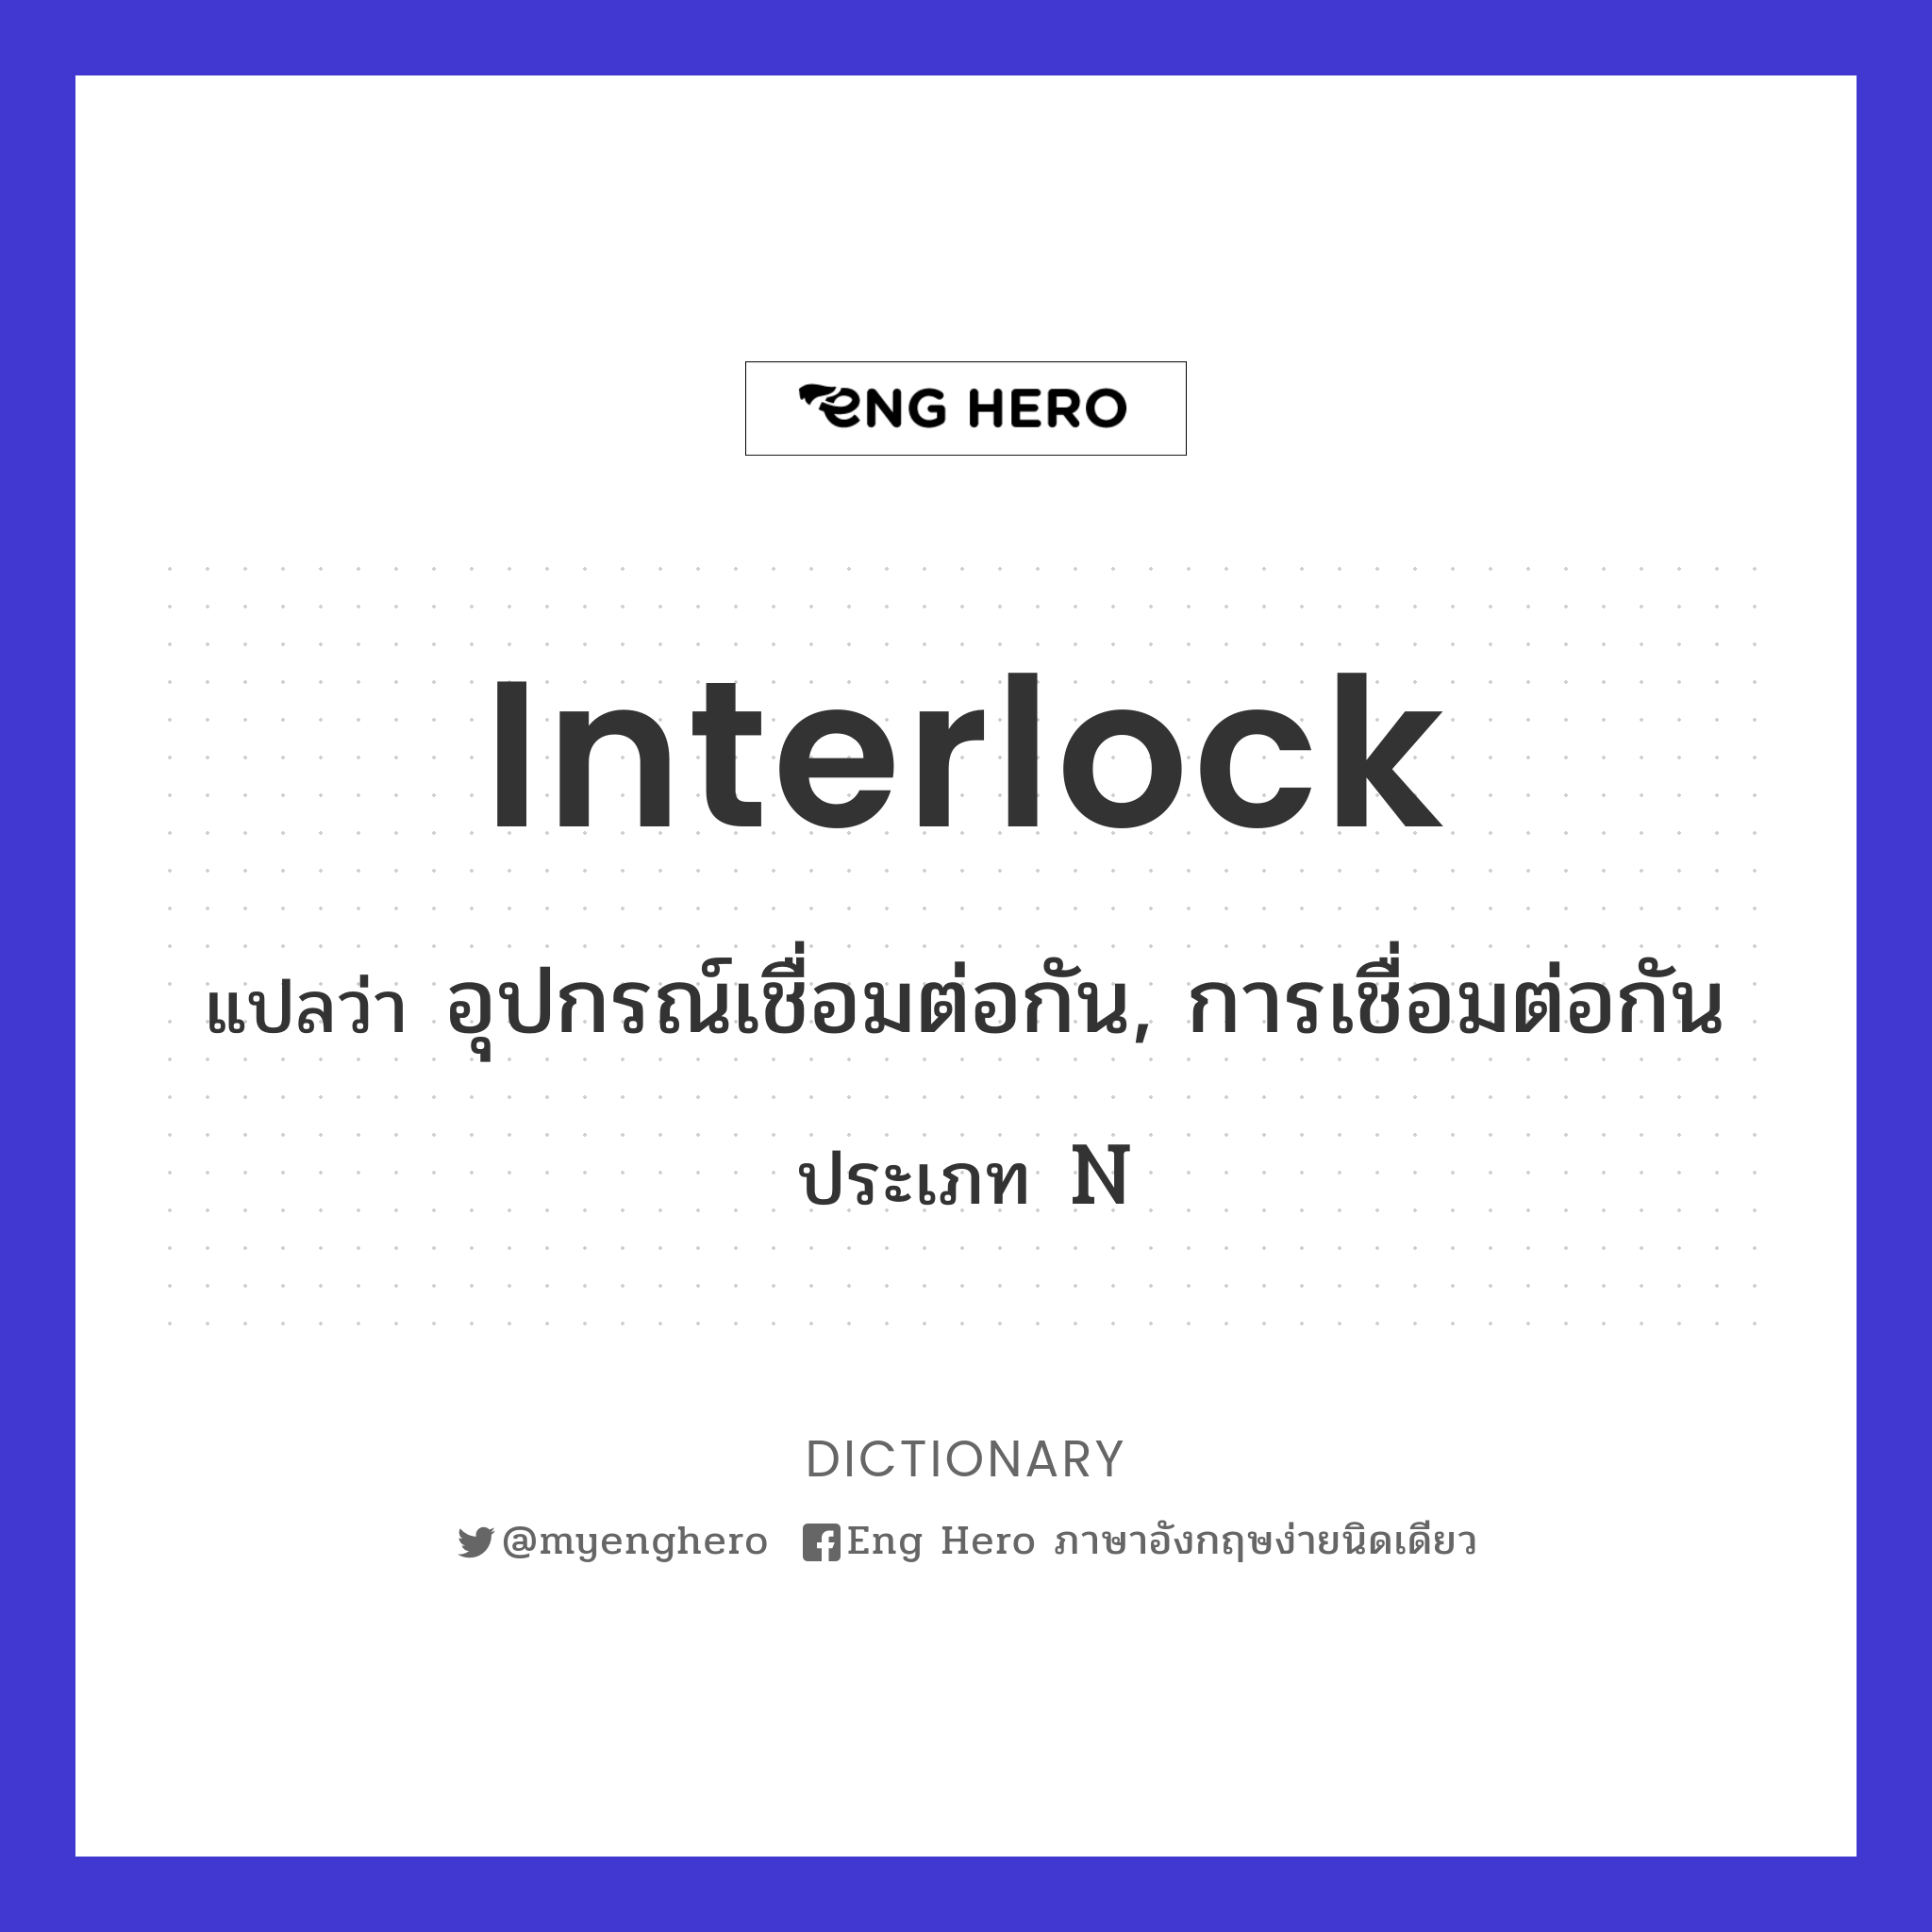 interlock